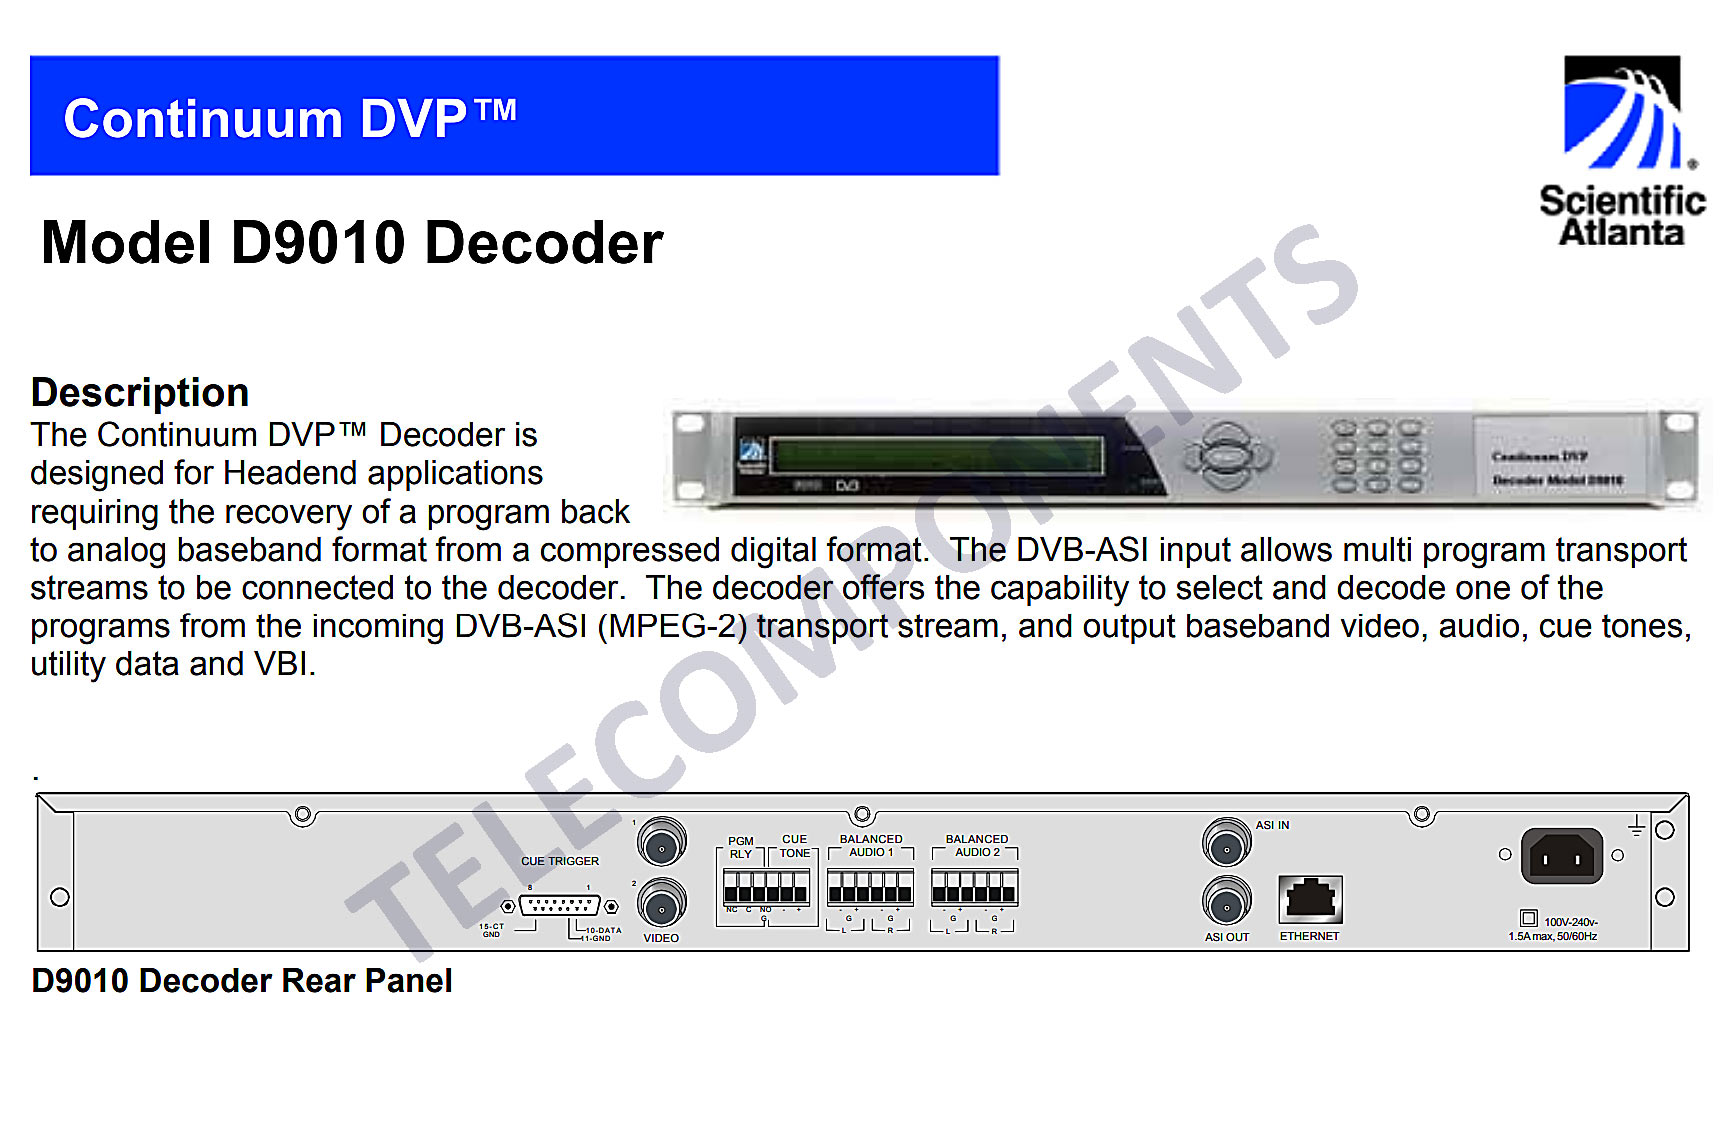 D9010 - Mpeg/2 Decoder DVBT Asi Cisco Scientific Atlanta